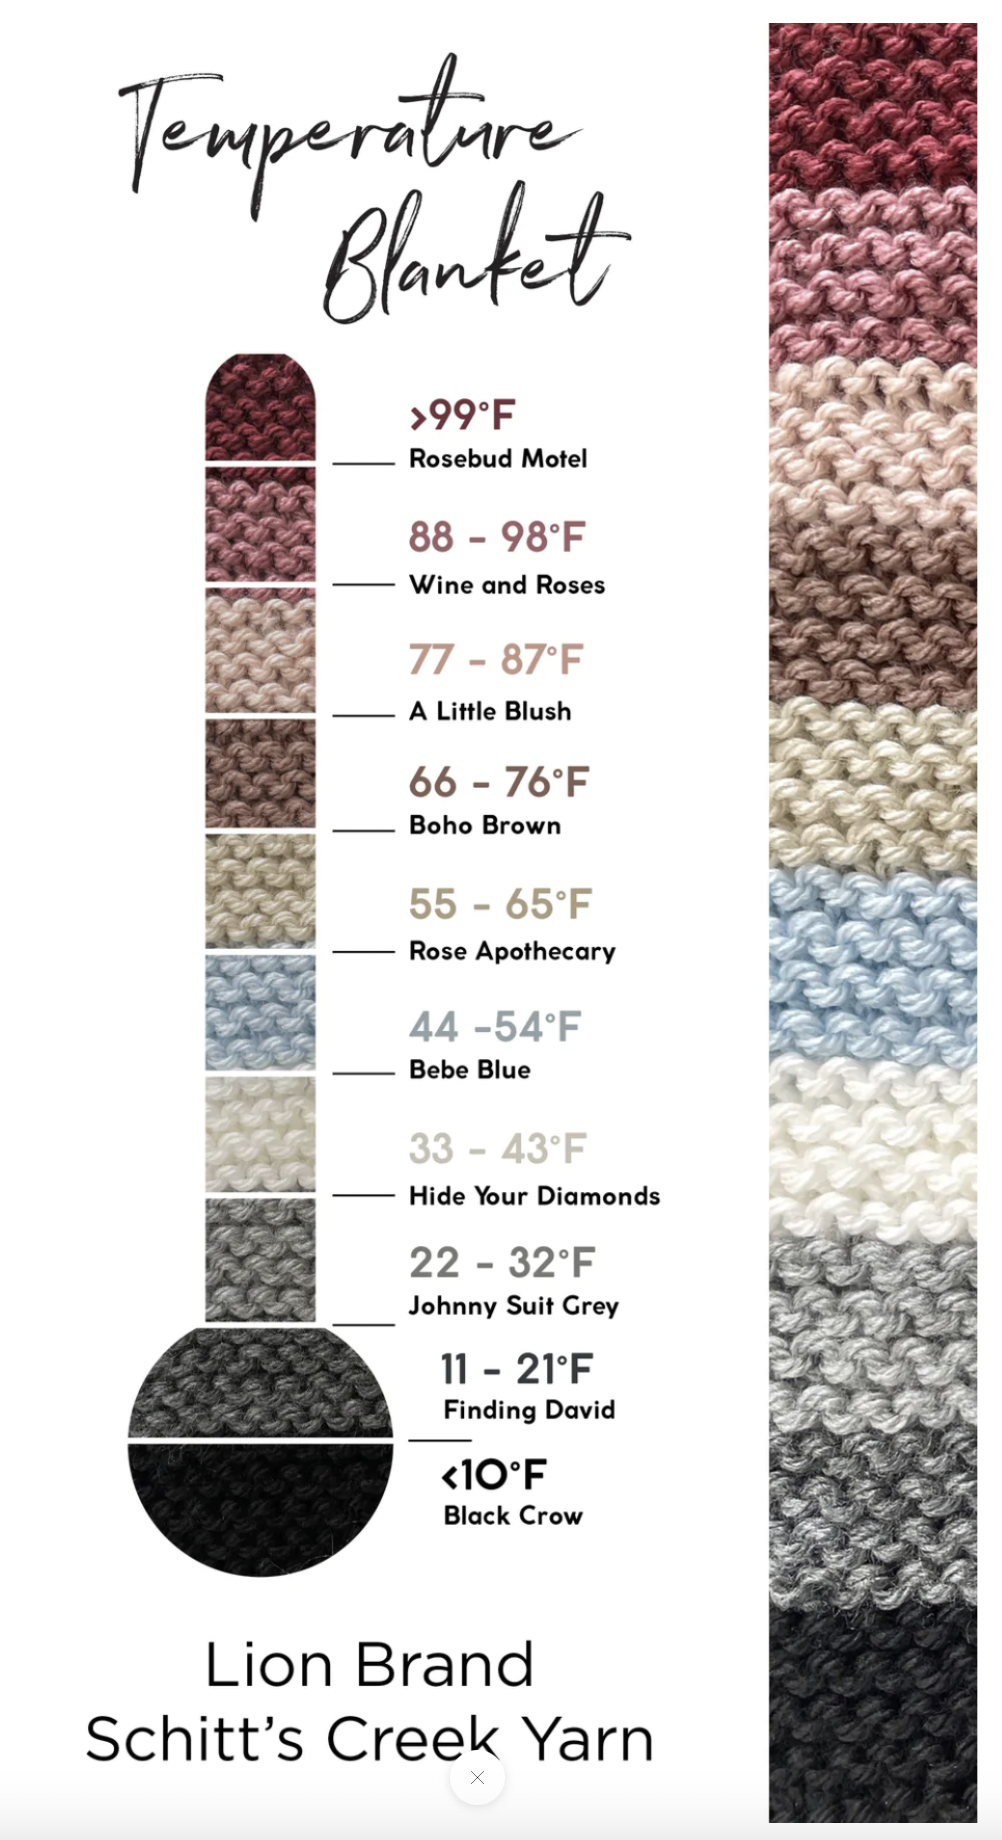 Lion brand Knit Temperature Blanket Kit